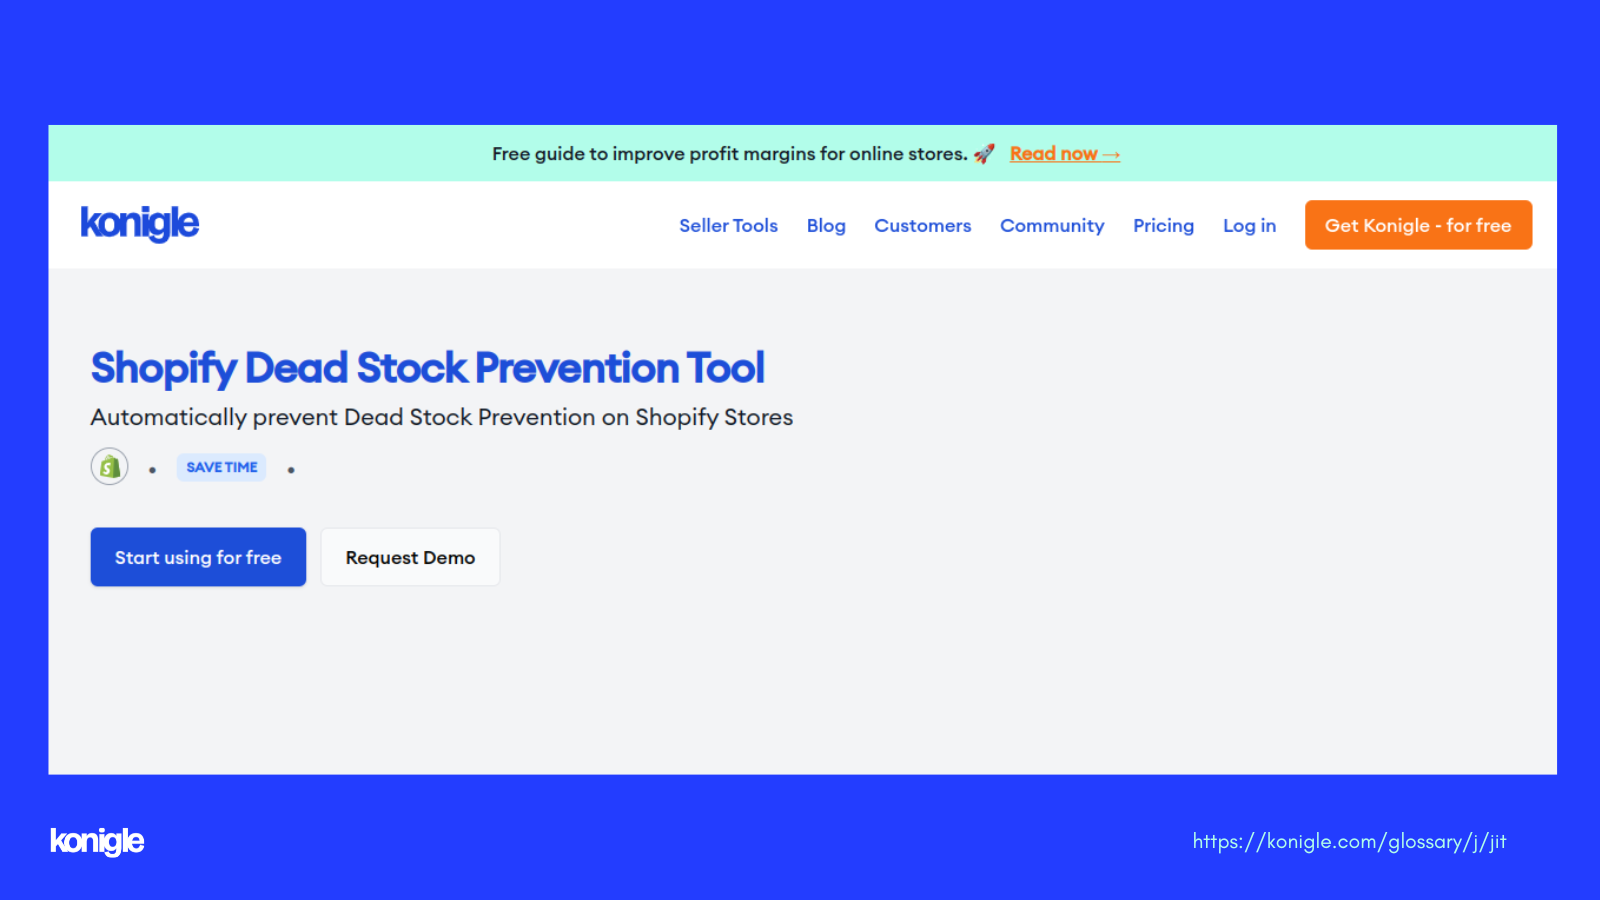 Konigle's shopify dead stock prevention tool